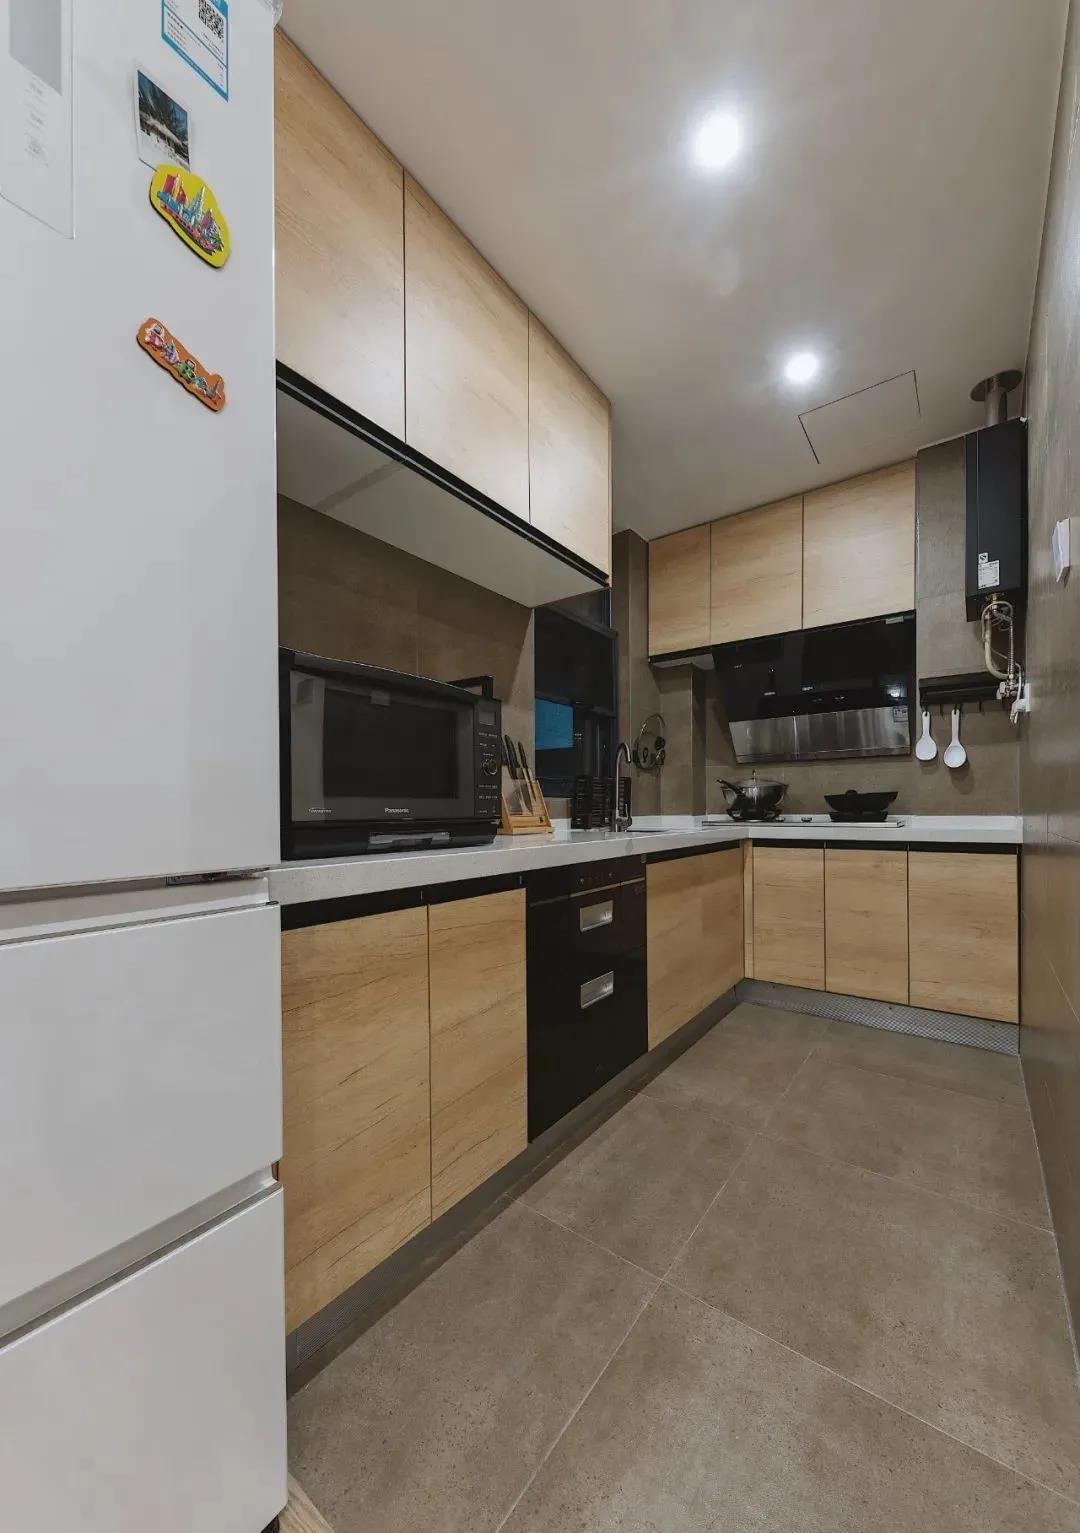 L型厨房休闲大气，木色橱柜搭配白色工作台温暖明亮，厨房动线设计合理。